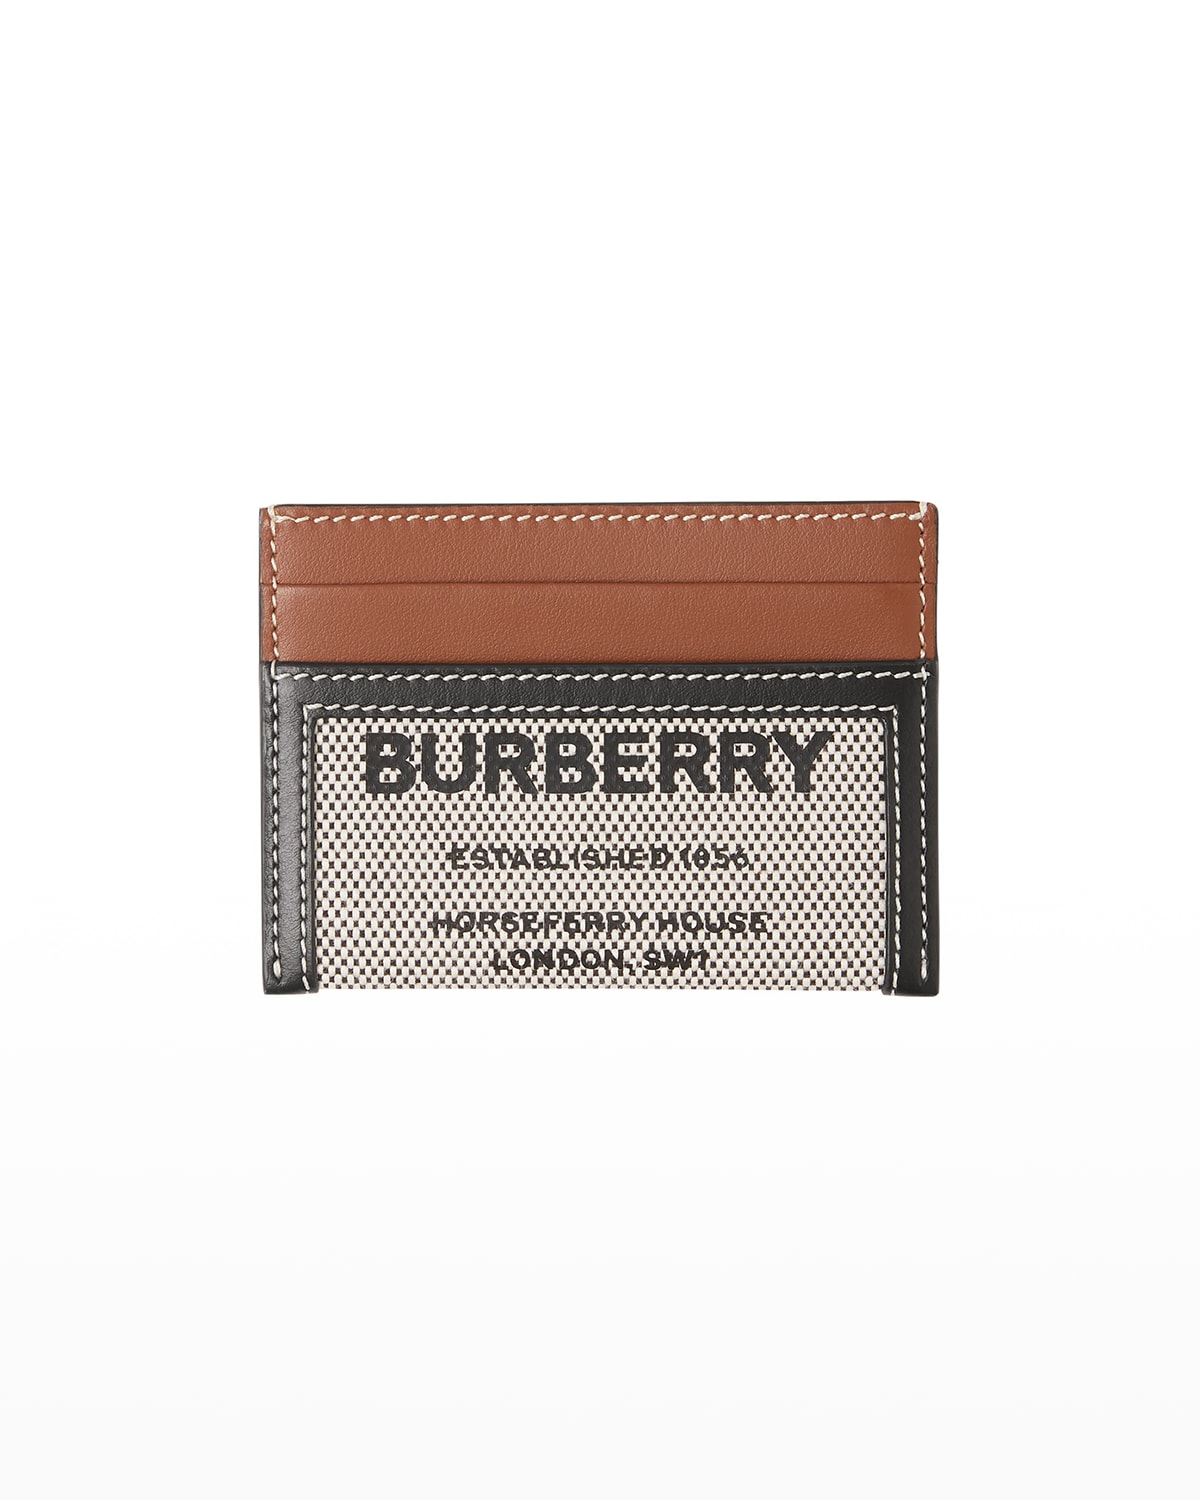 Burberry Leather Card Case | Neiman Marcus